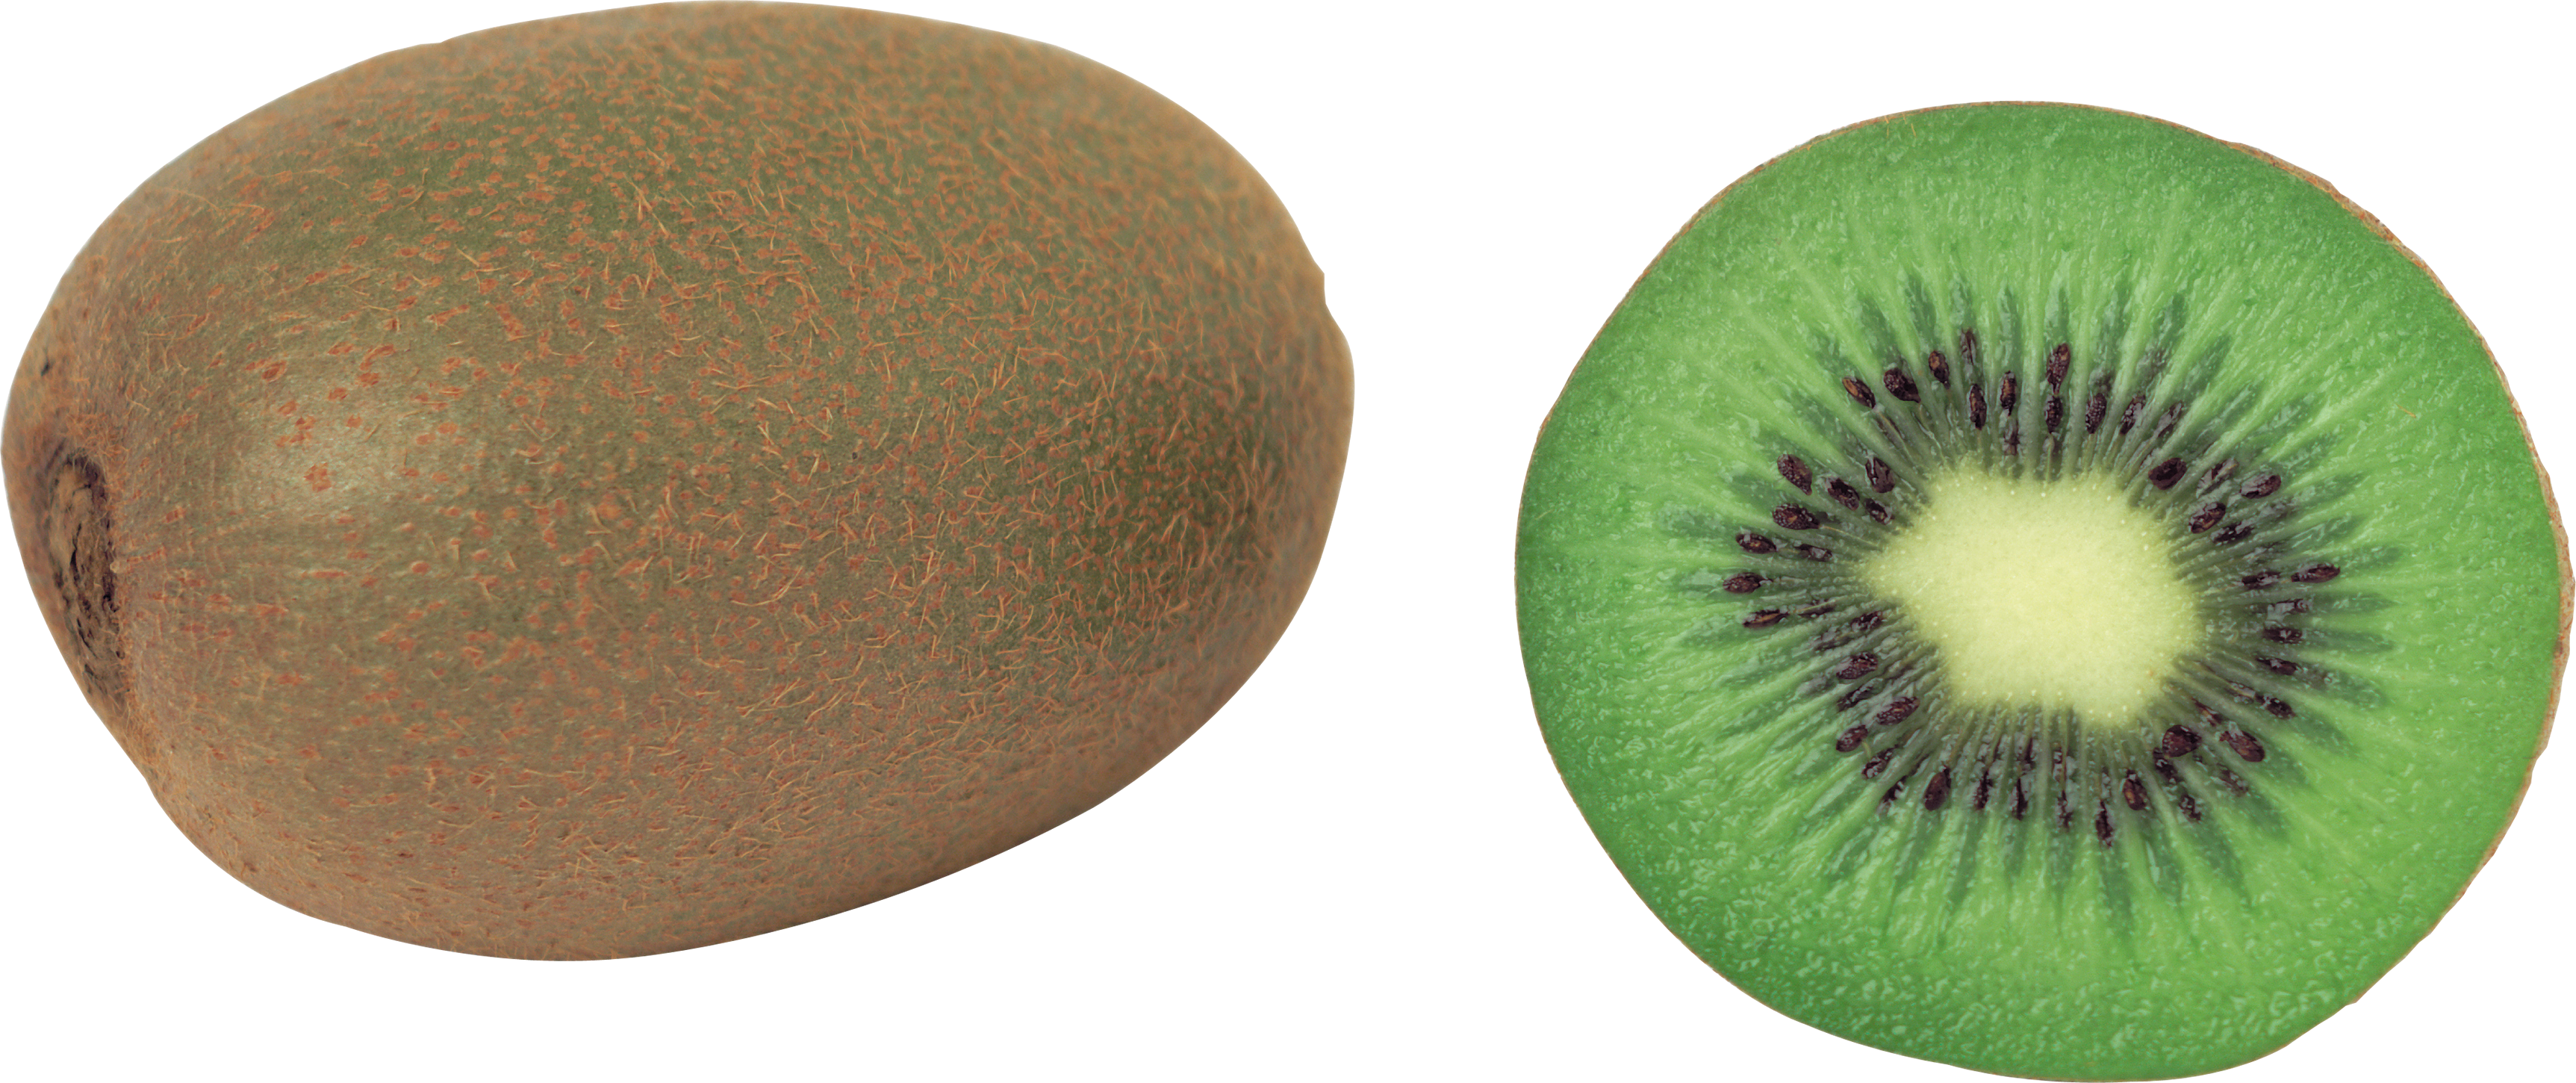 A Close Up Of A Kiwi Fruit